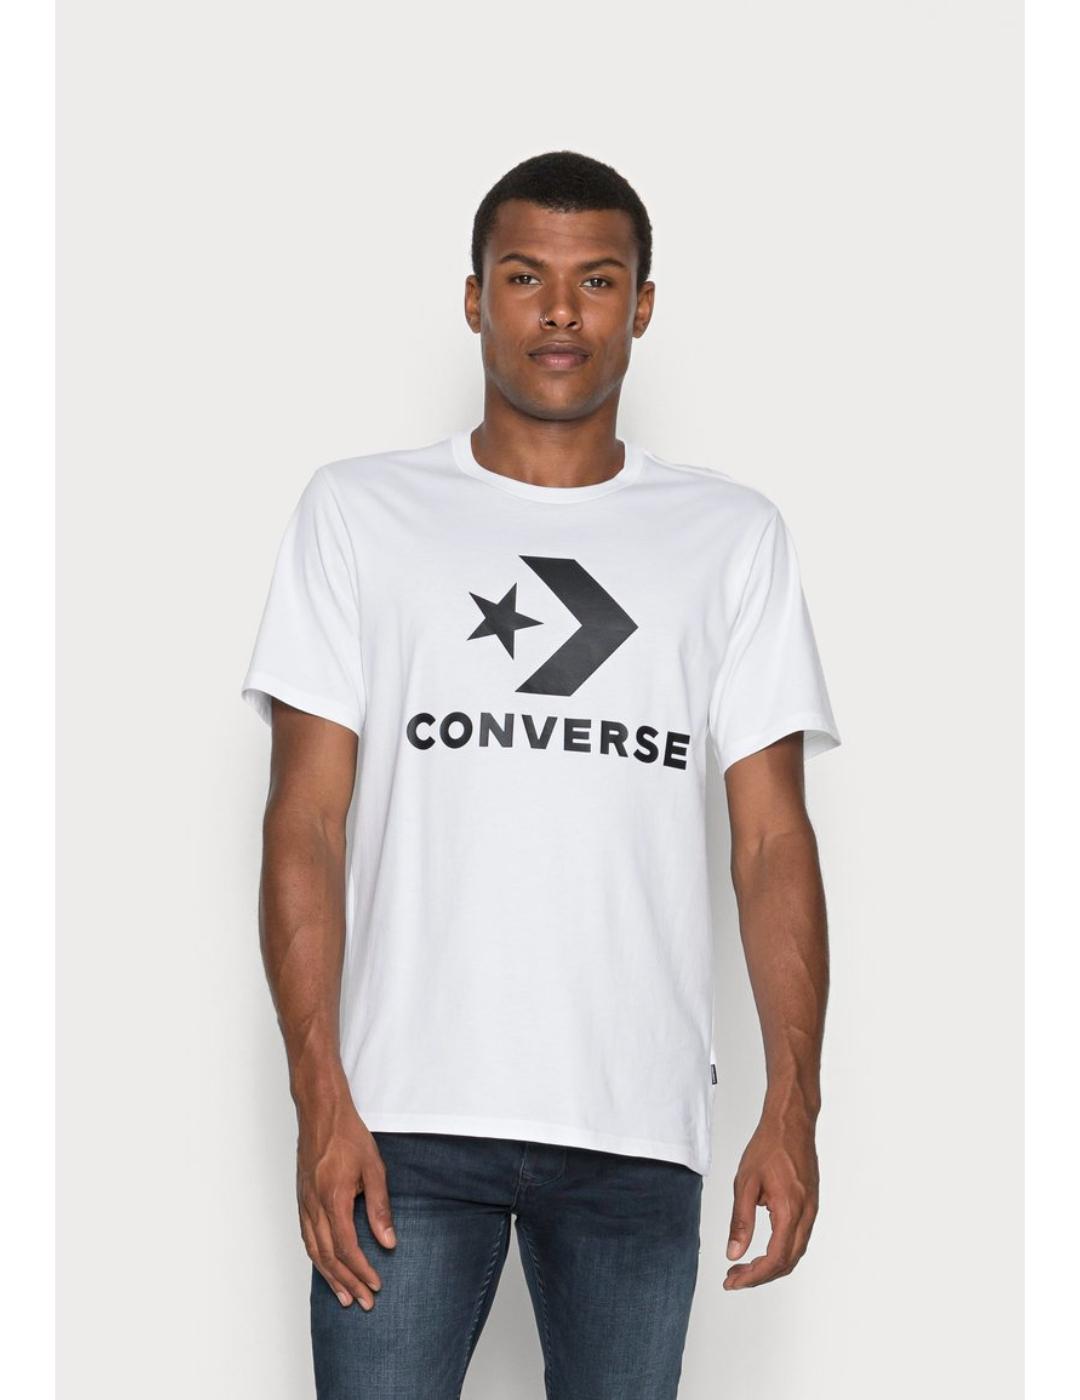 Antagonista sangrado línea Camiseta Converse All Star blanca para hombre